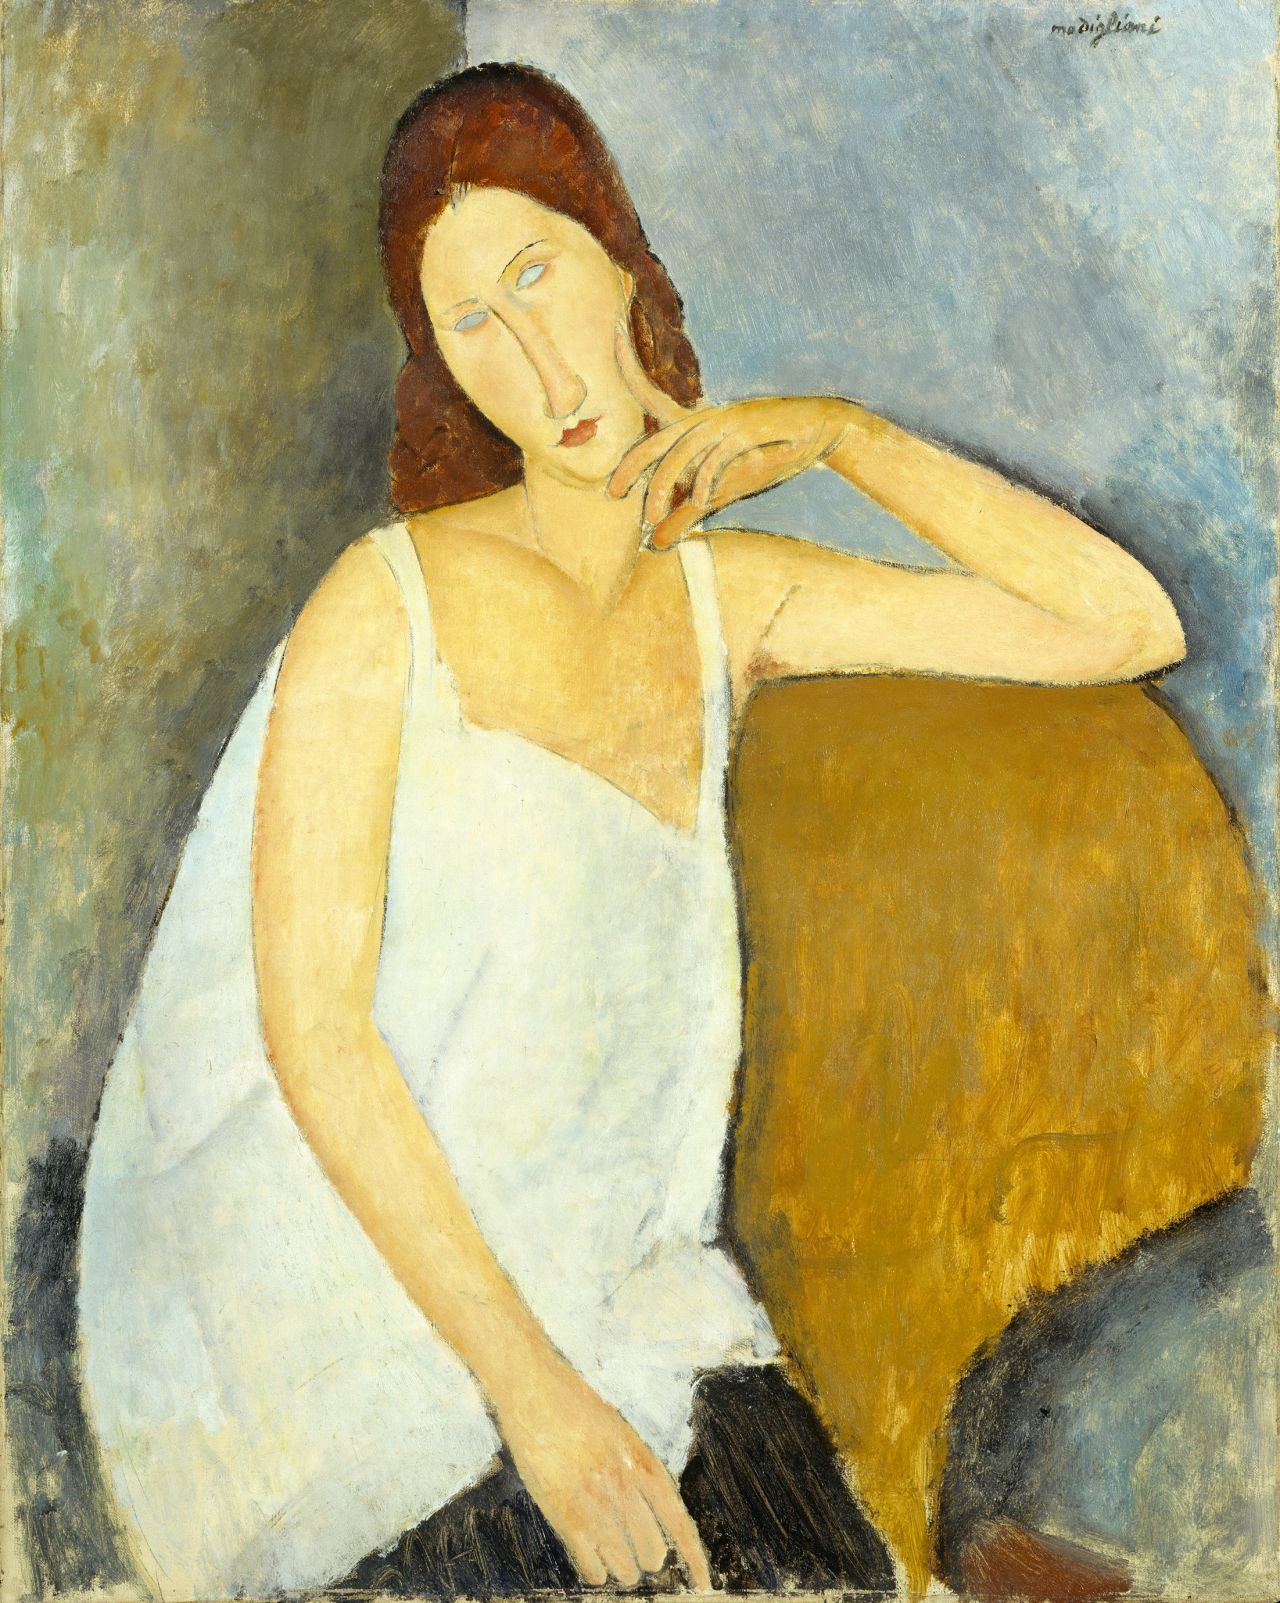 Jeanne Hébuterne 1919  Medium Oil paint on canvas 914 x 730 mm The Metropolitan Museum of Art, New York